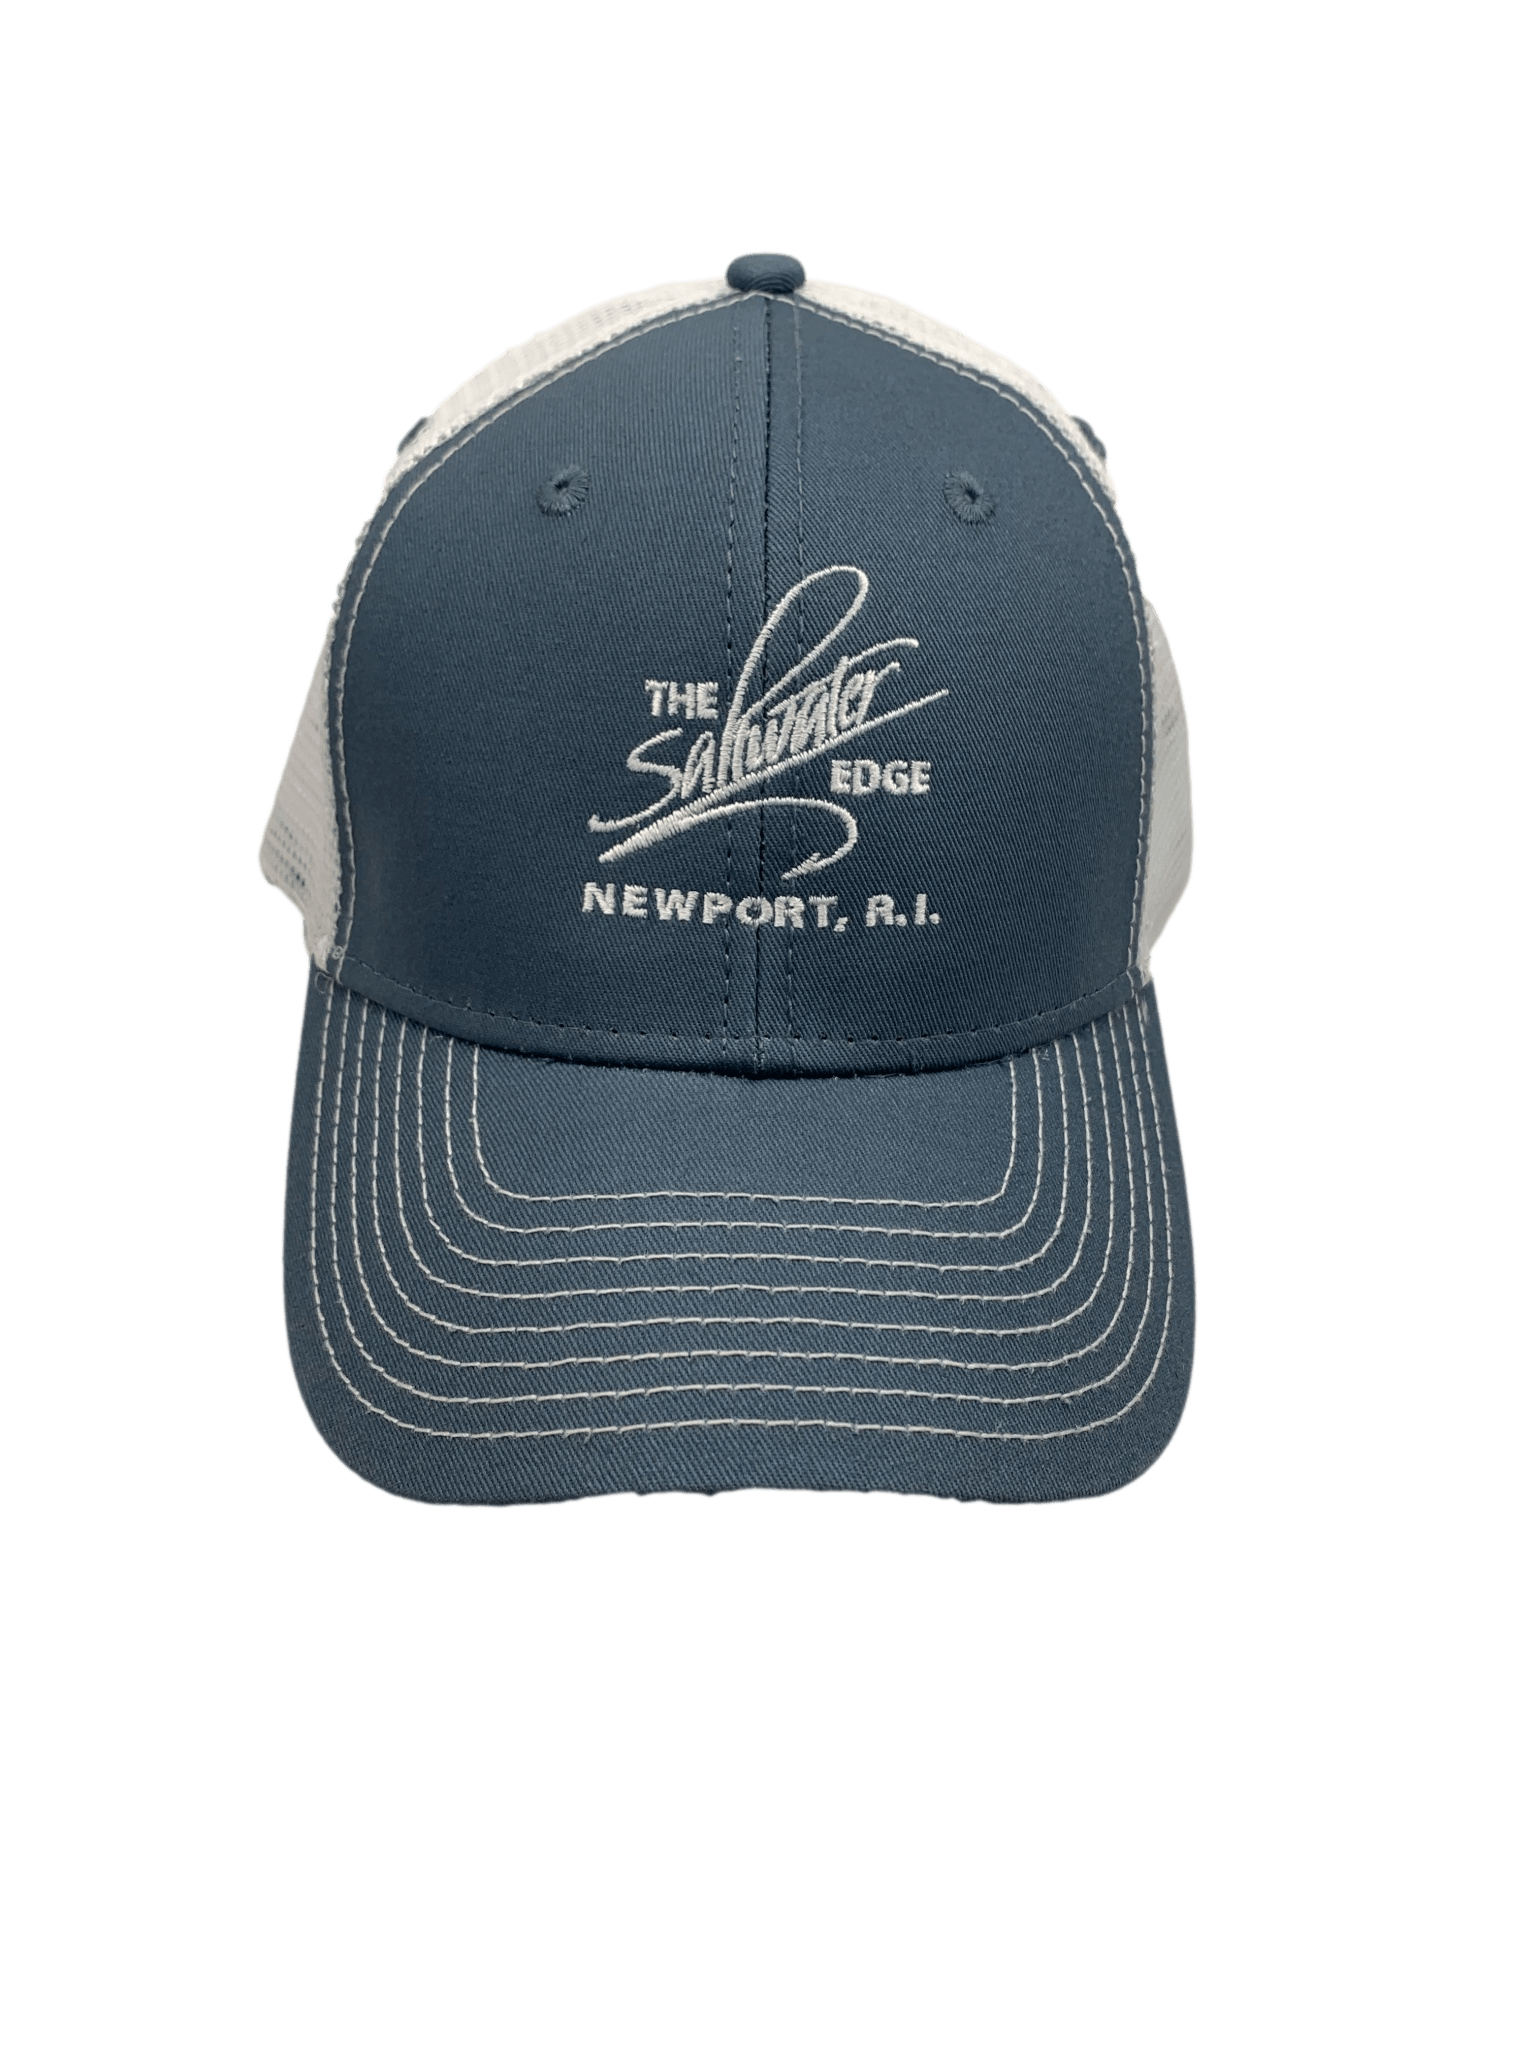 Orvis Fly Fishing Logo Patch Trucker Snapback Mesh Hat Cap New